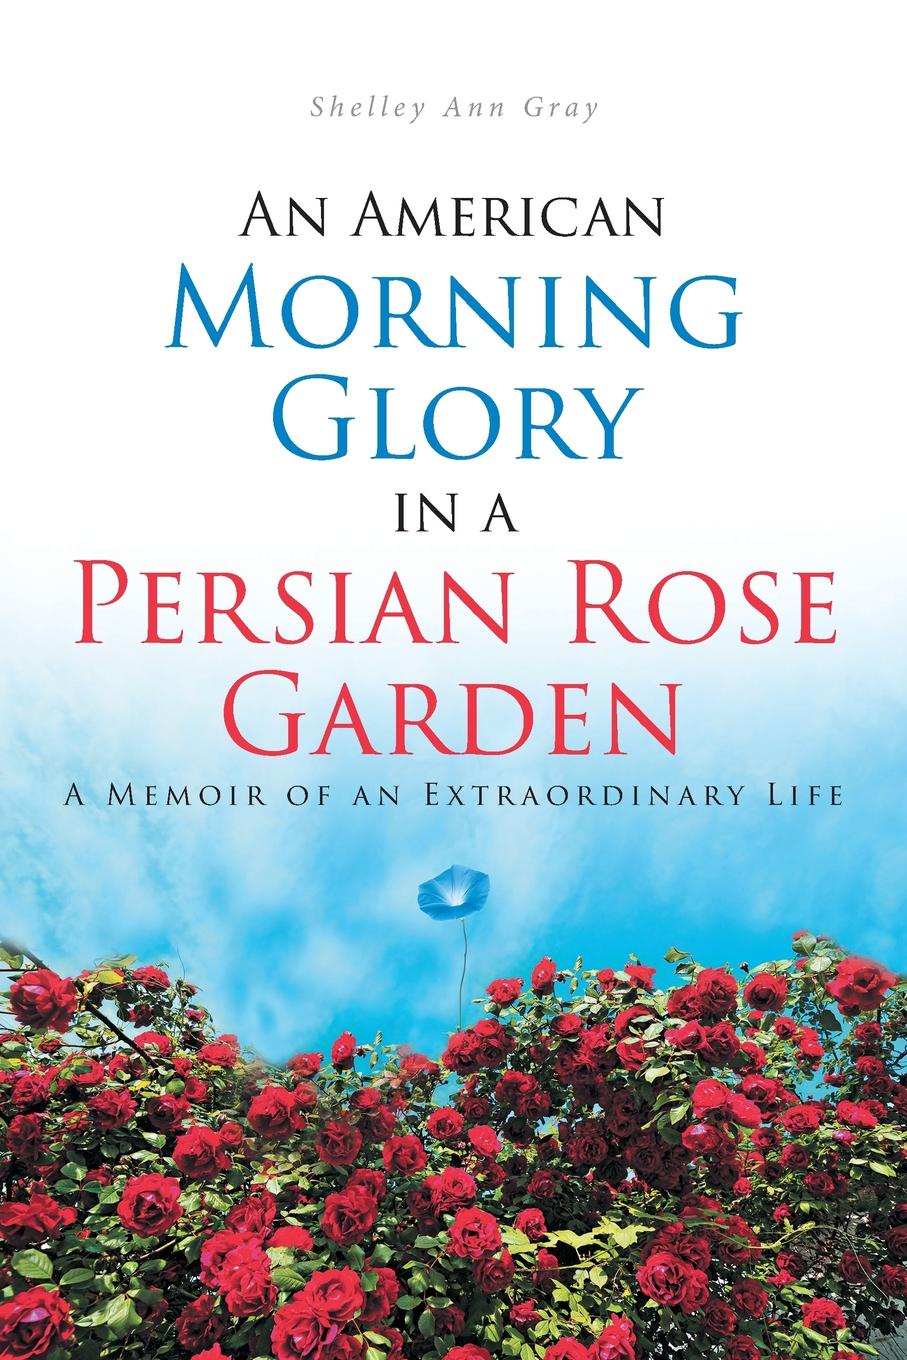 An American Morning Glory in a Persian Rose Garden. A Memoir of an Extraordinary Life